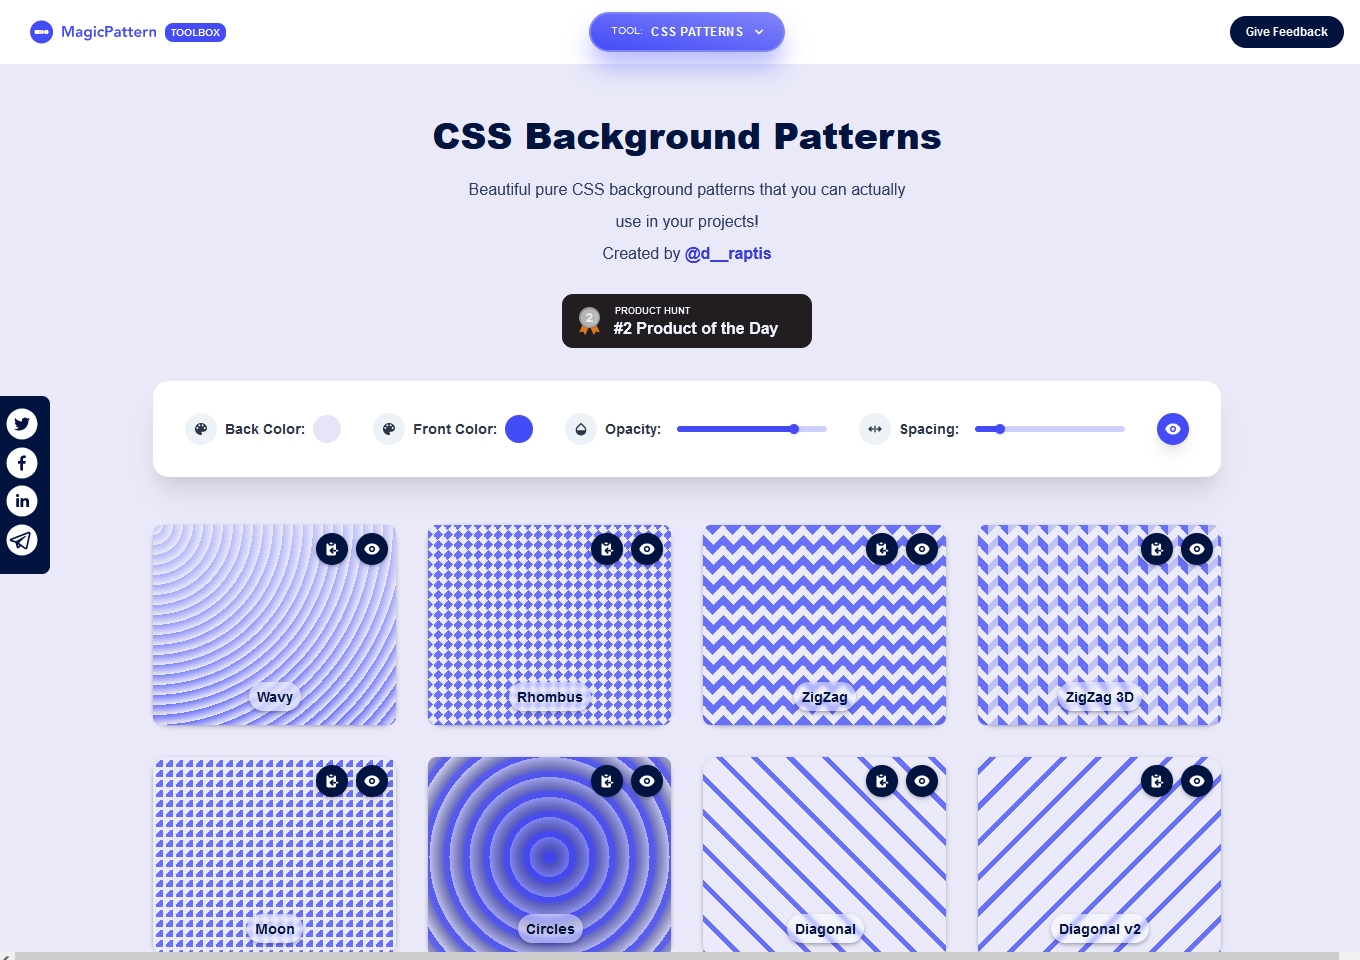 CSS Background Patterns（CSSバックグラウンドパターンズ）